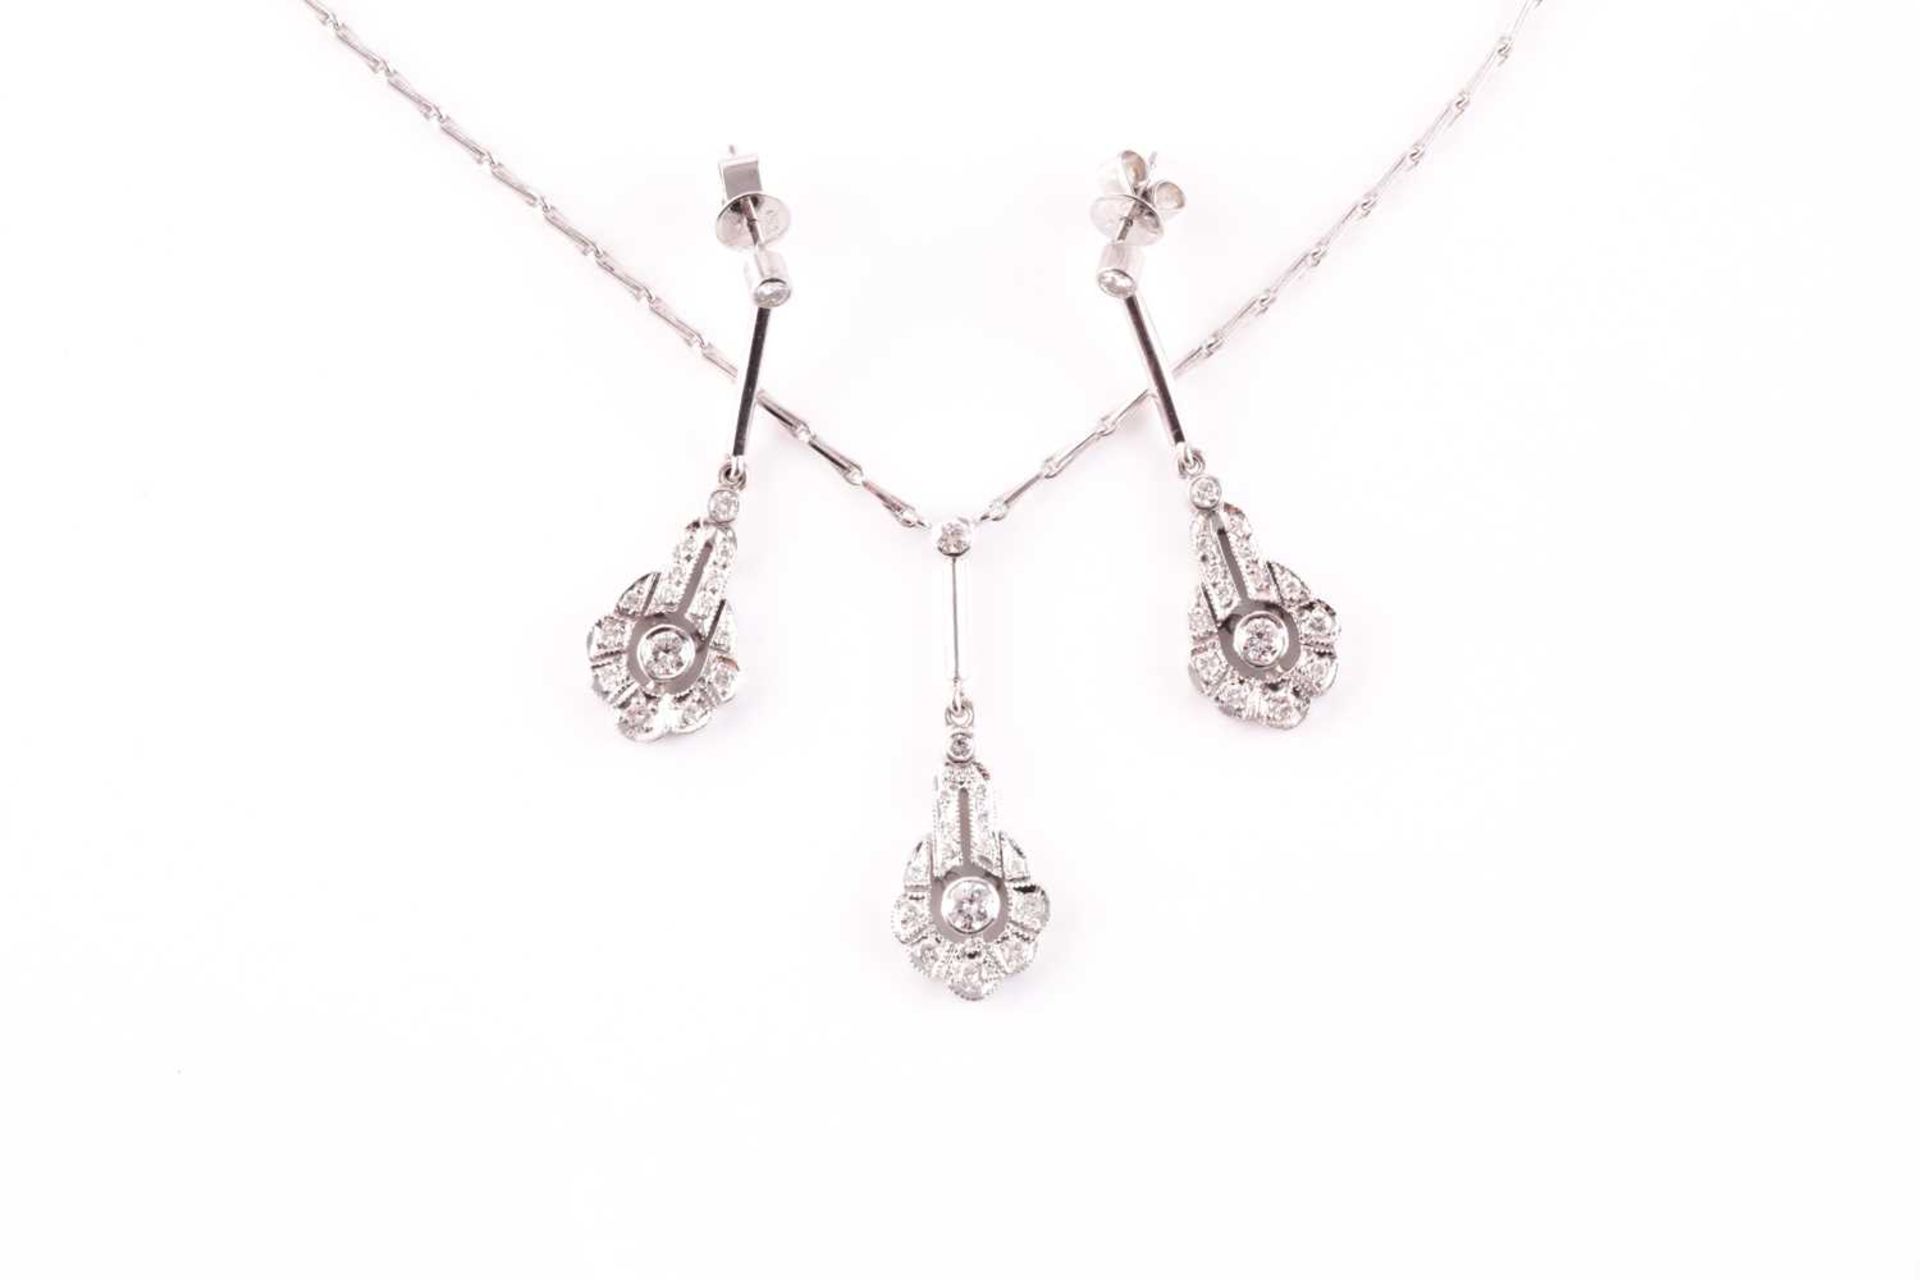 An 18ct white gold and diamond drop pendant necklace, set with round-cut diamonds, pendant 3.2 cm